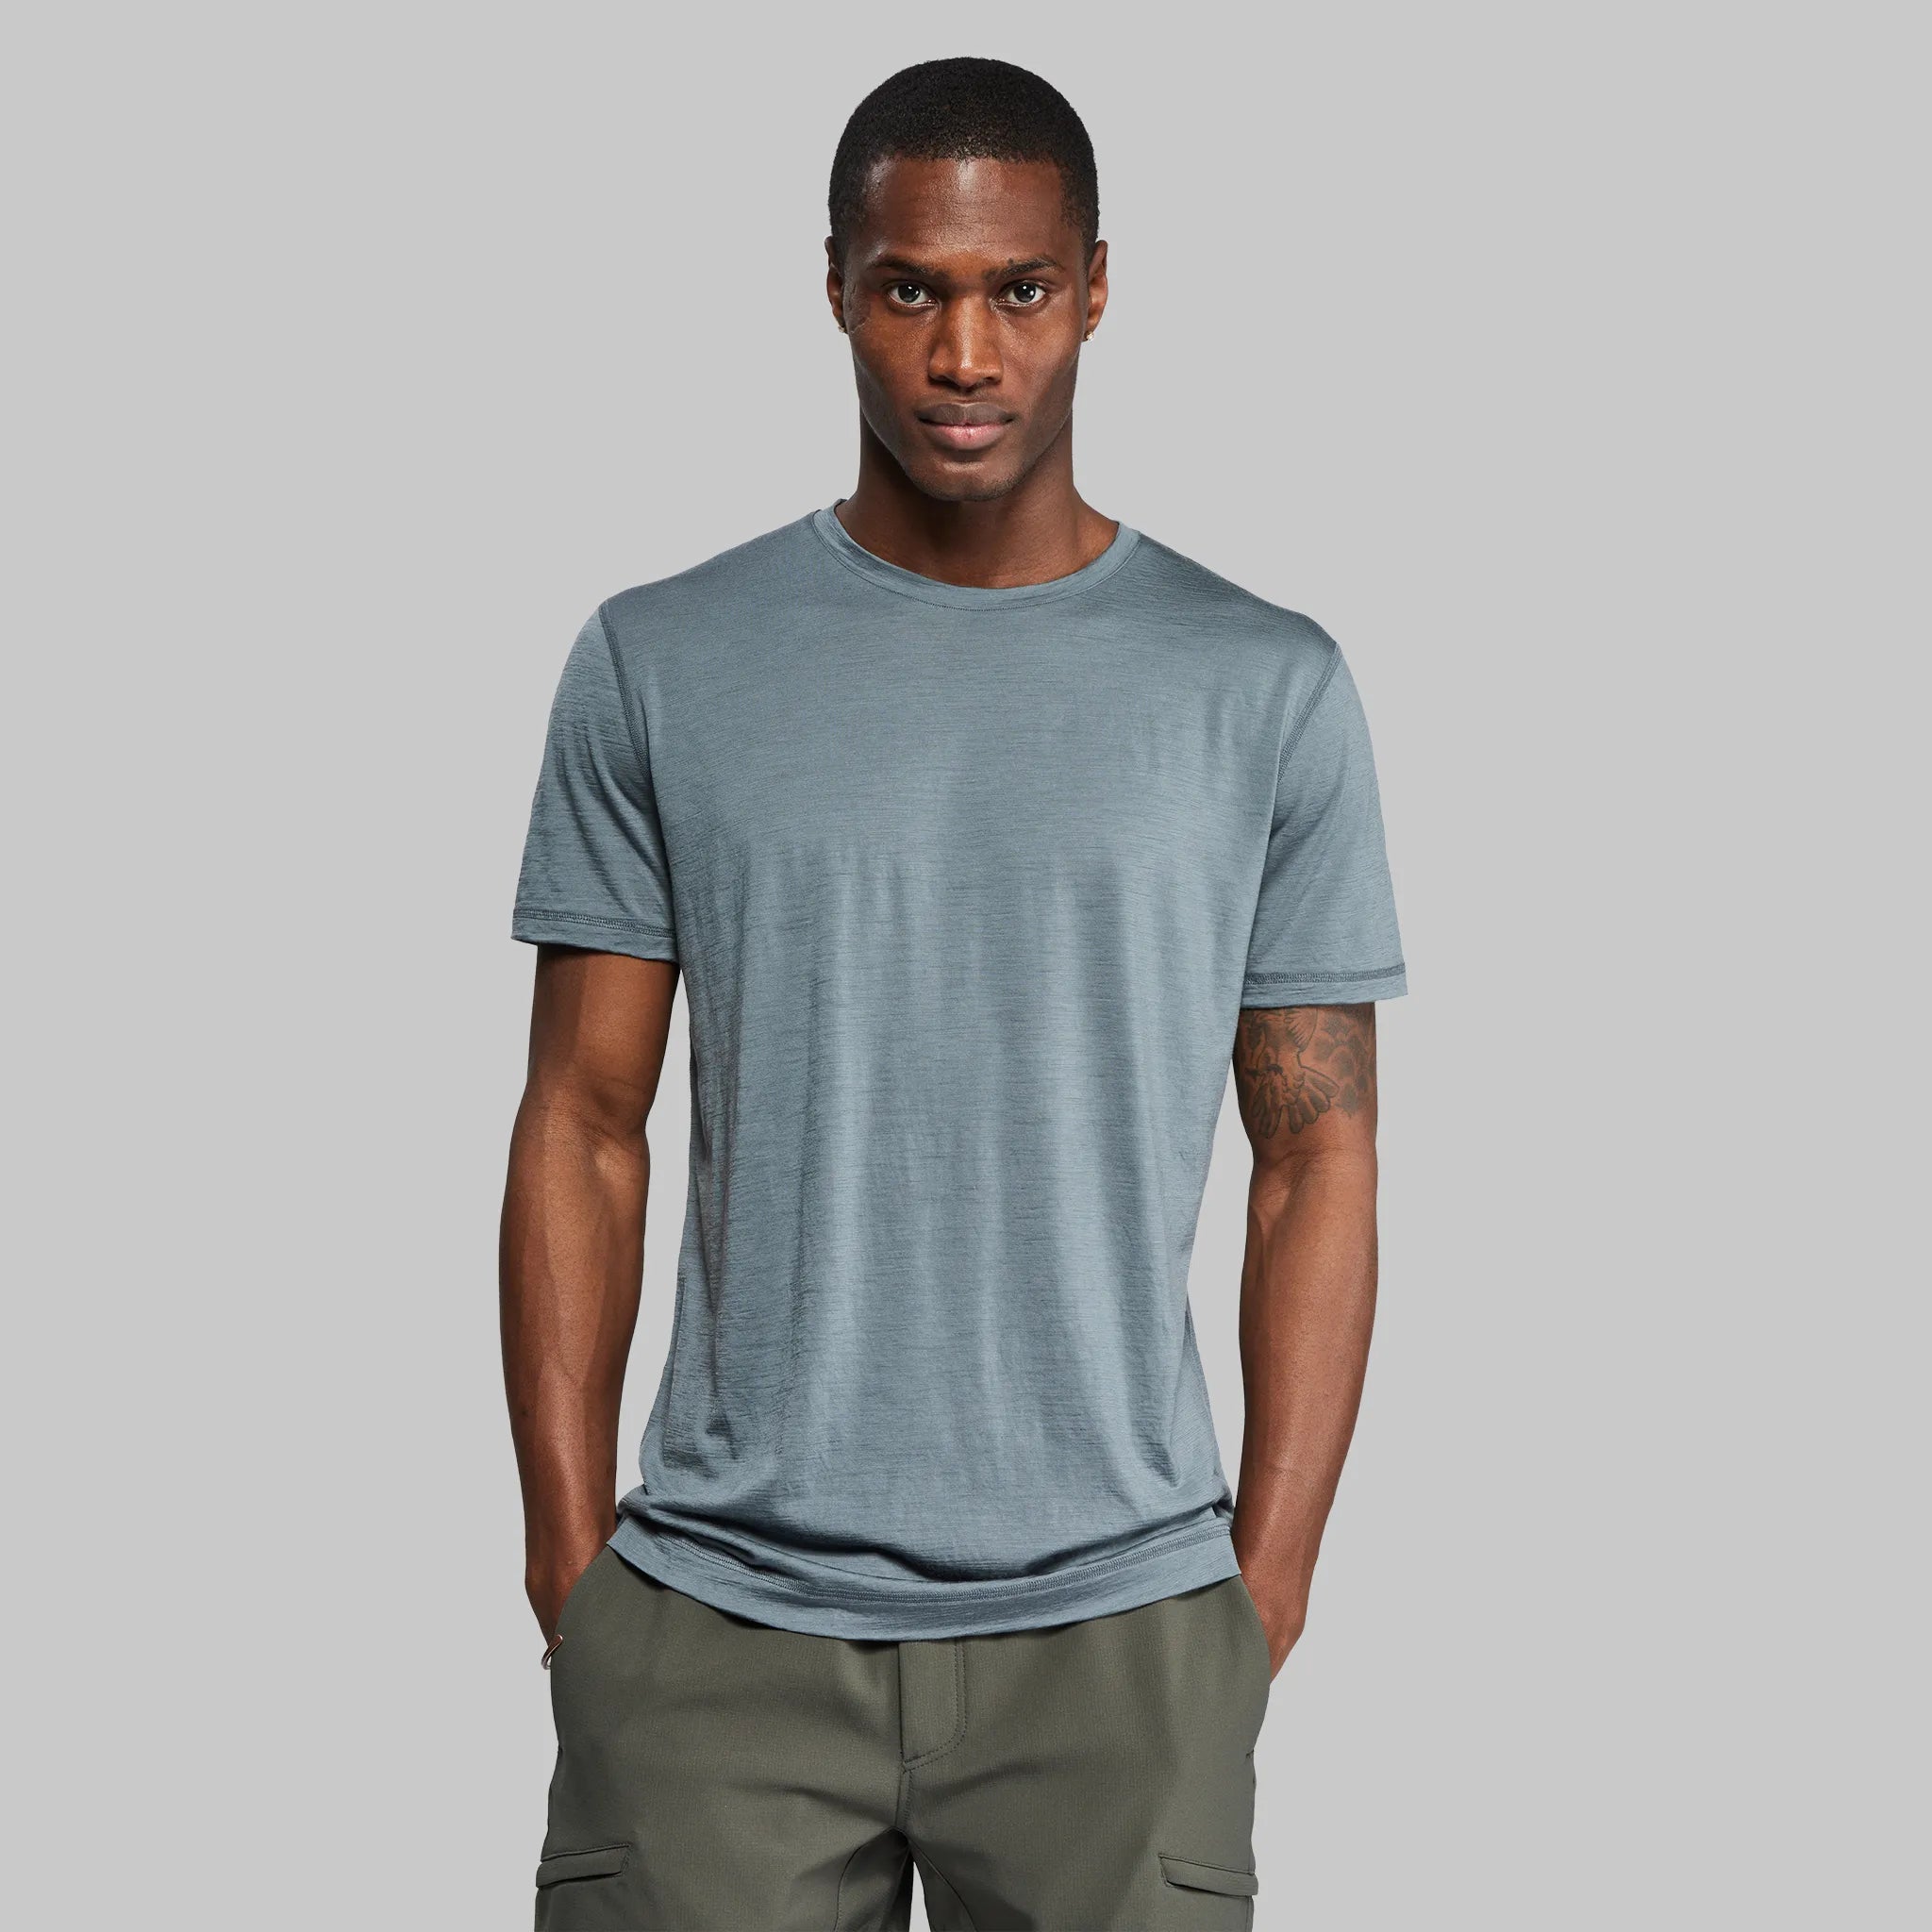 Planet Earth T Shirt. Grey-Blue edition